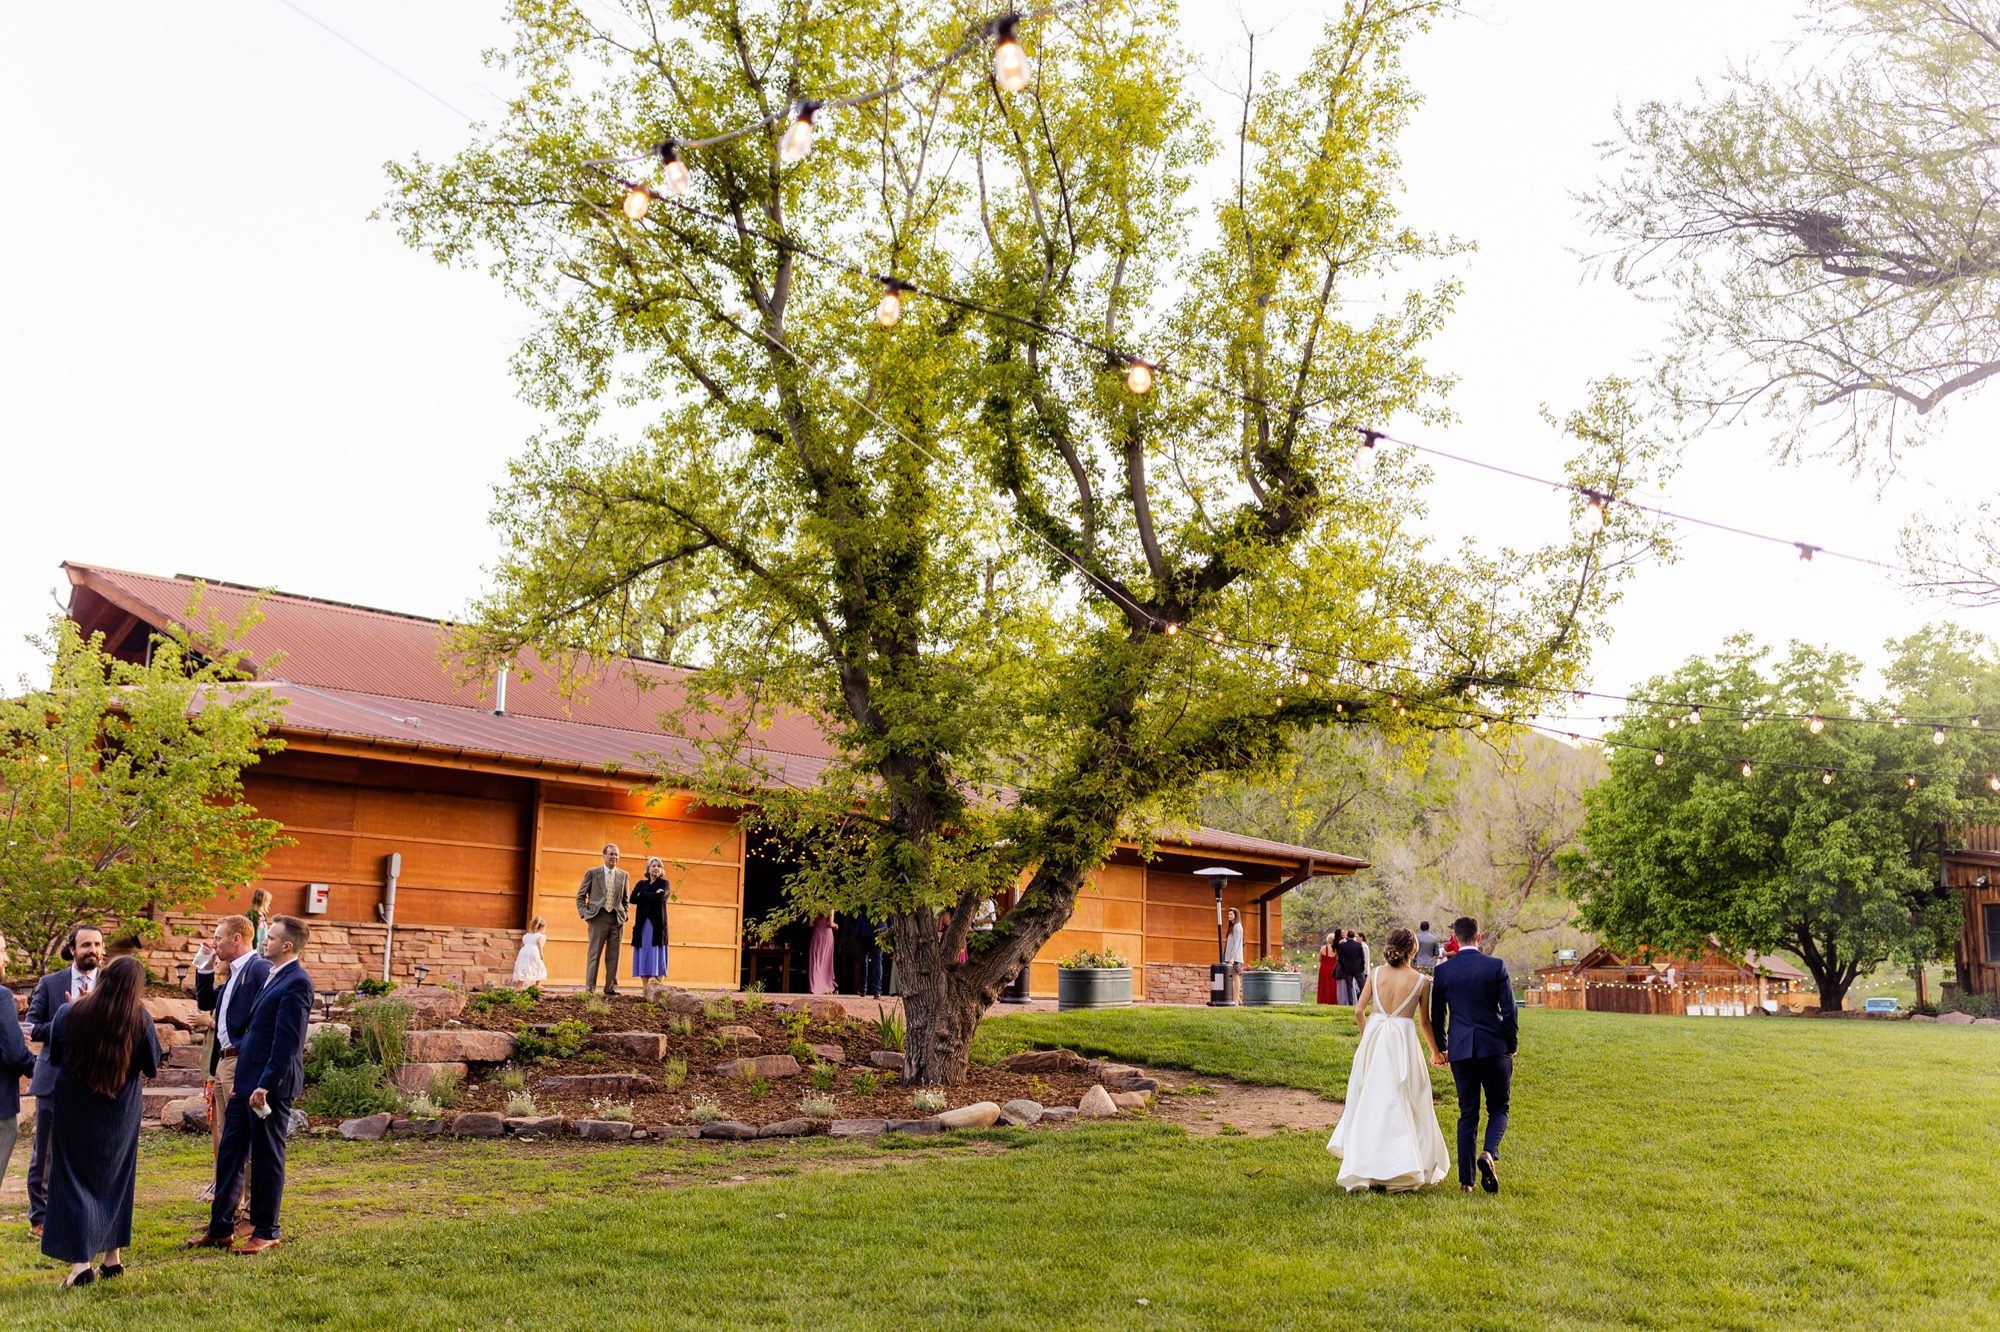 Planet Bluegrass Wedding venue in Lyons Colorado: Colorado Wedding Photographer, Sunset bride and groom photos, Wedding reception